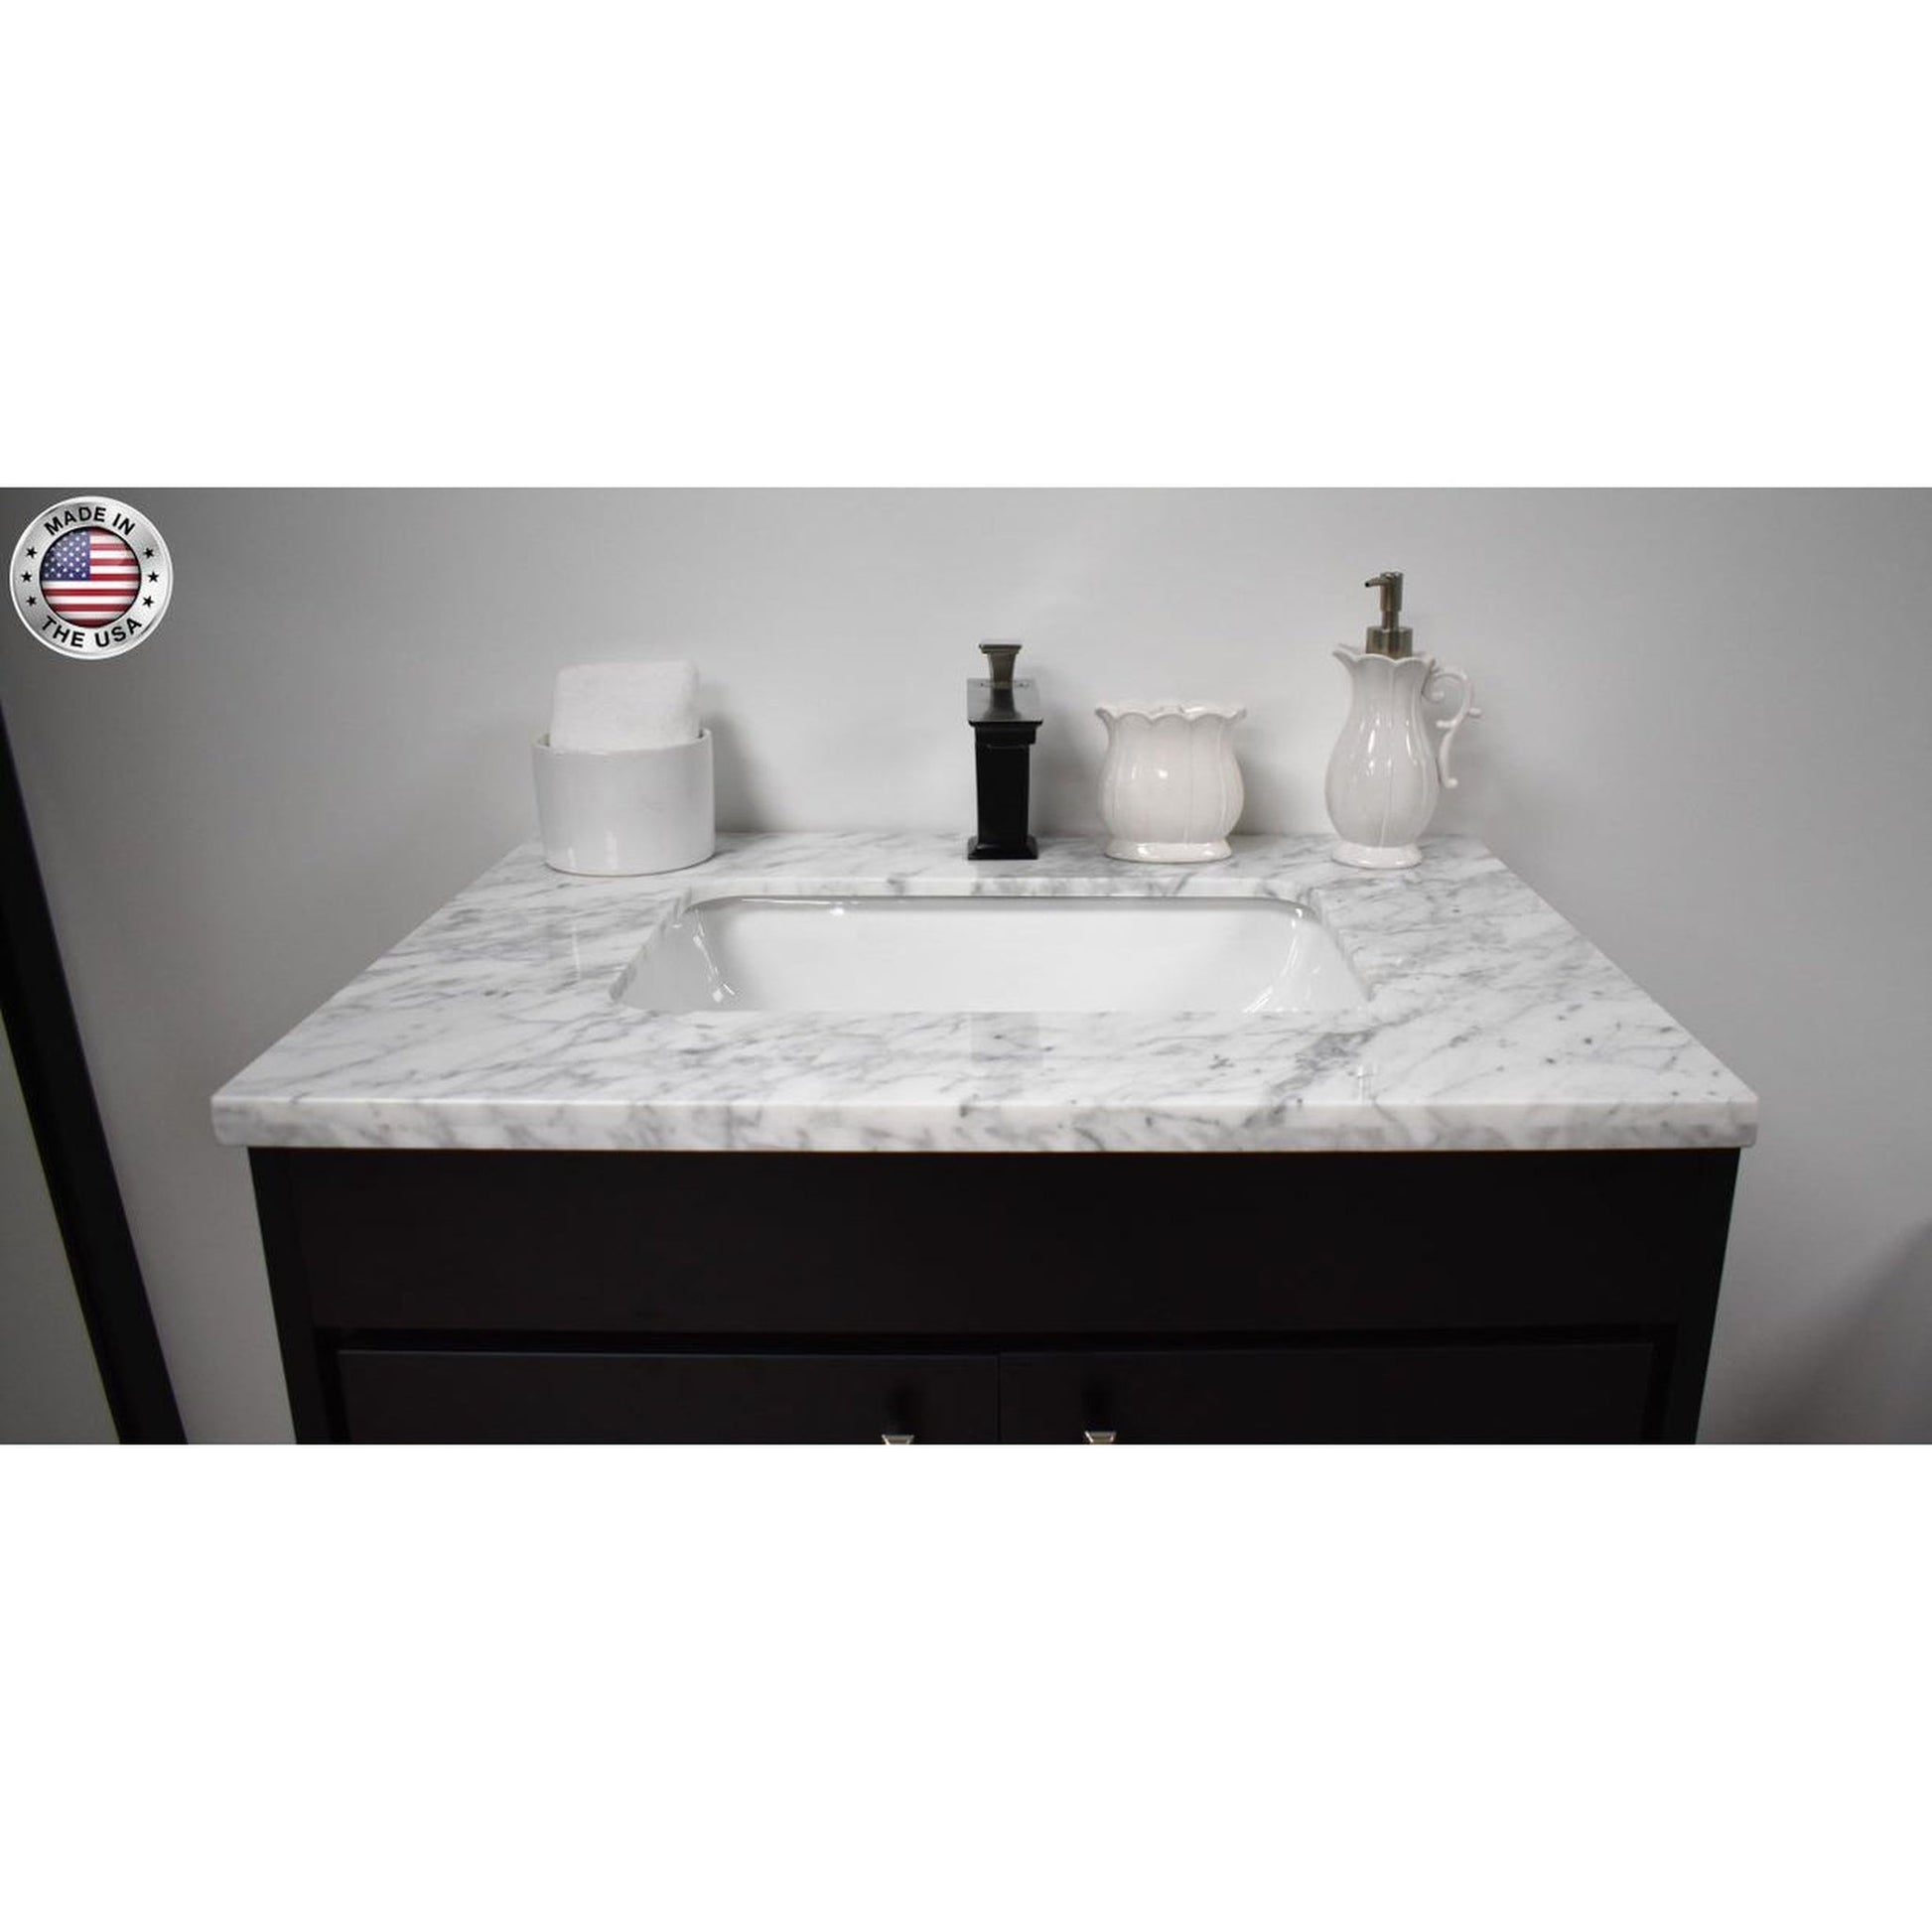 Volpa USA Capri 36" x 22" Black Freestanding Modern Bathroom Vanity With Preinstalled Undermount Sink And Carrara Marble top With Brushed Nickel Edge Handles